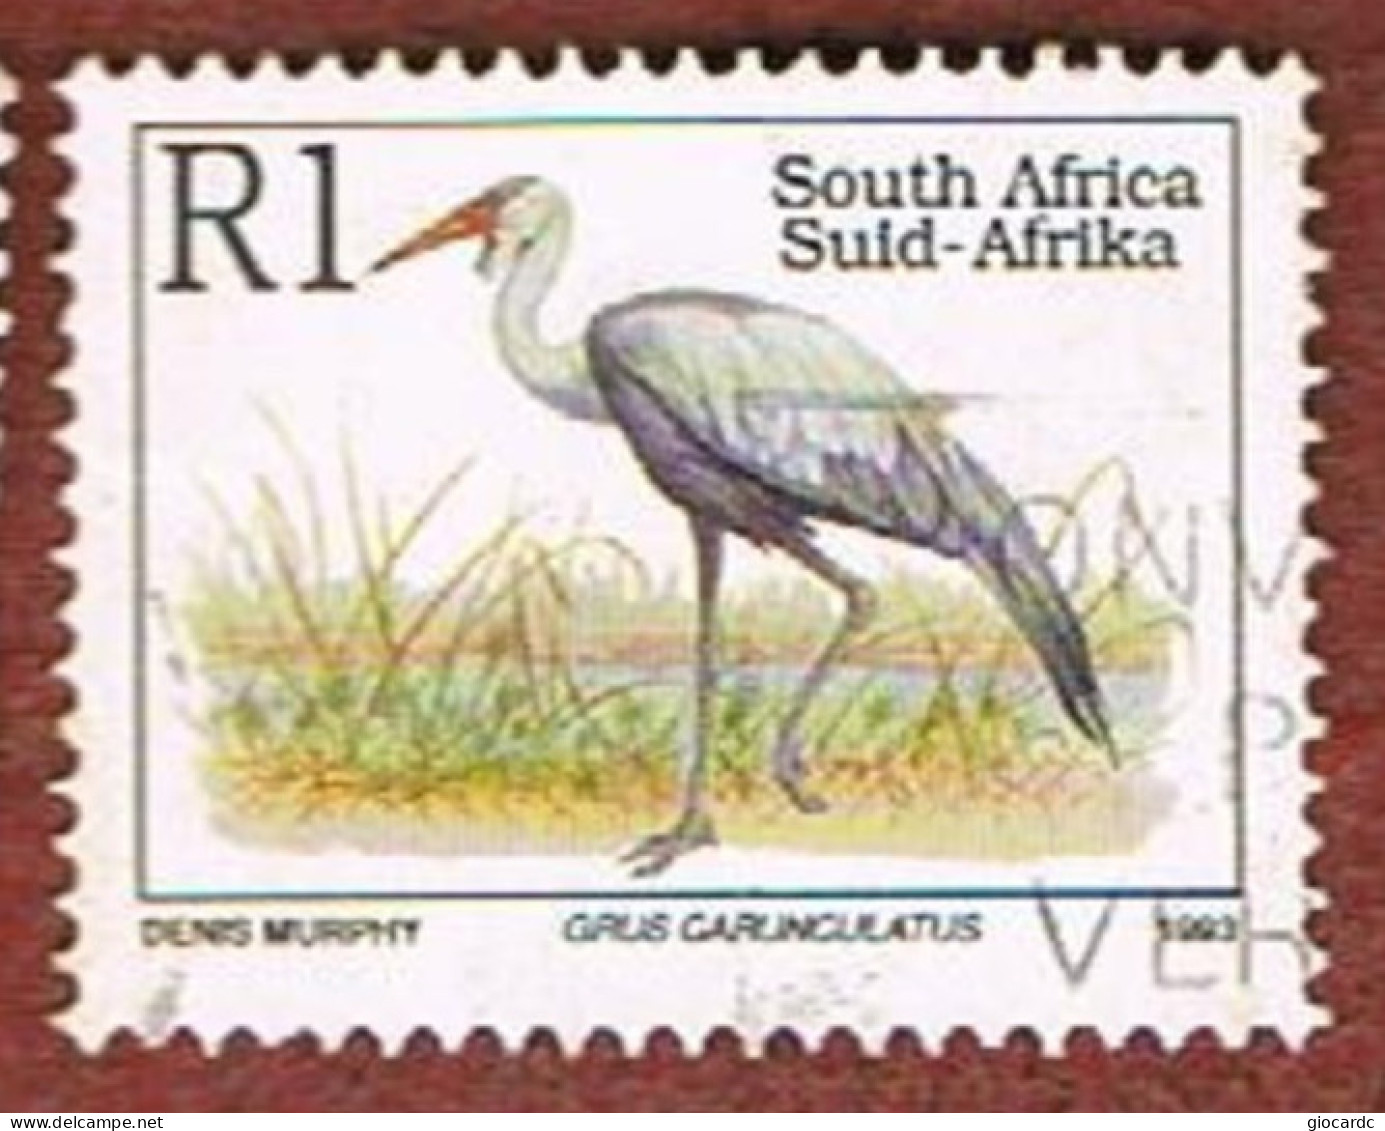 SUD AFRICA (SOUTH AFRICA) - SG 817c - 1993 ENDANGERED ANIMALS: WATTLED CRANE   - USED - Usati